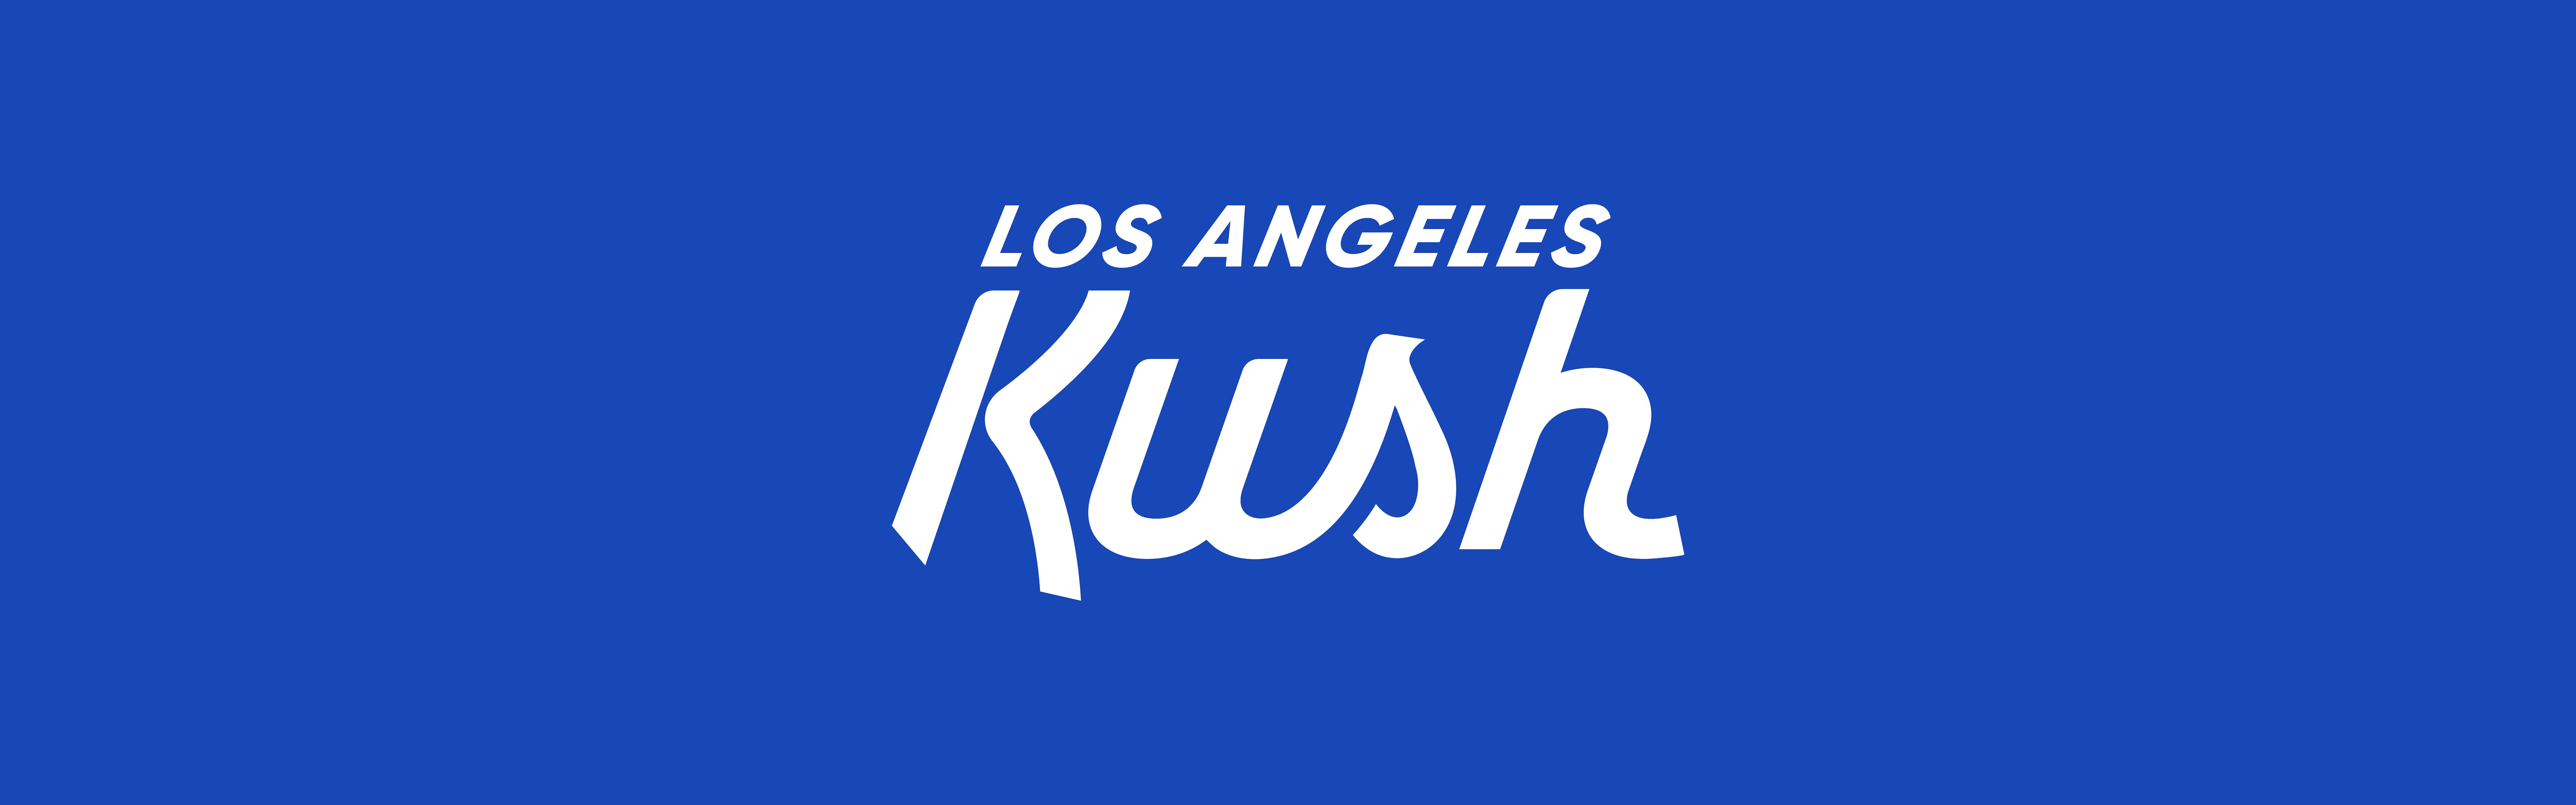 LA Kush - Los Angeles Kush banner